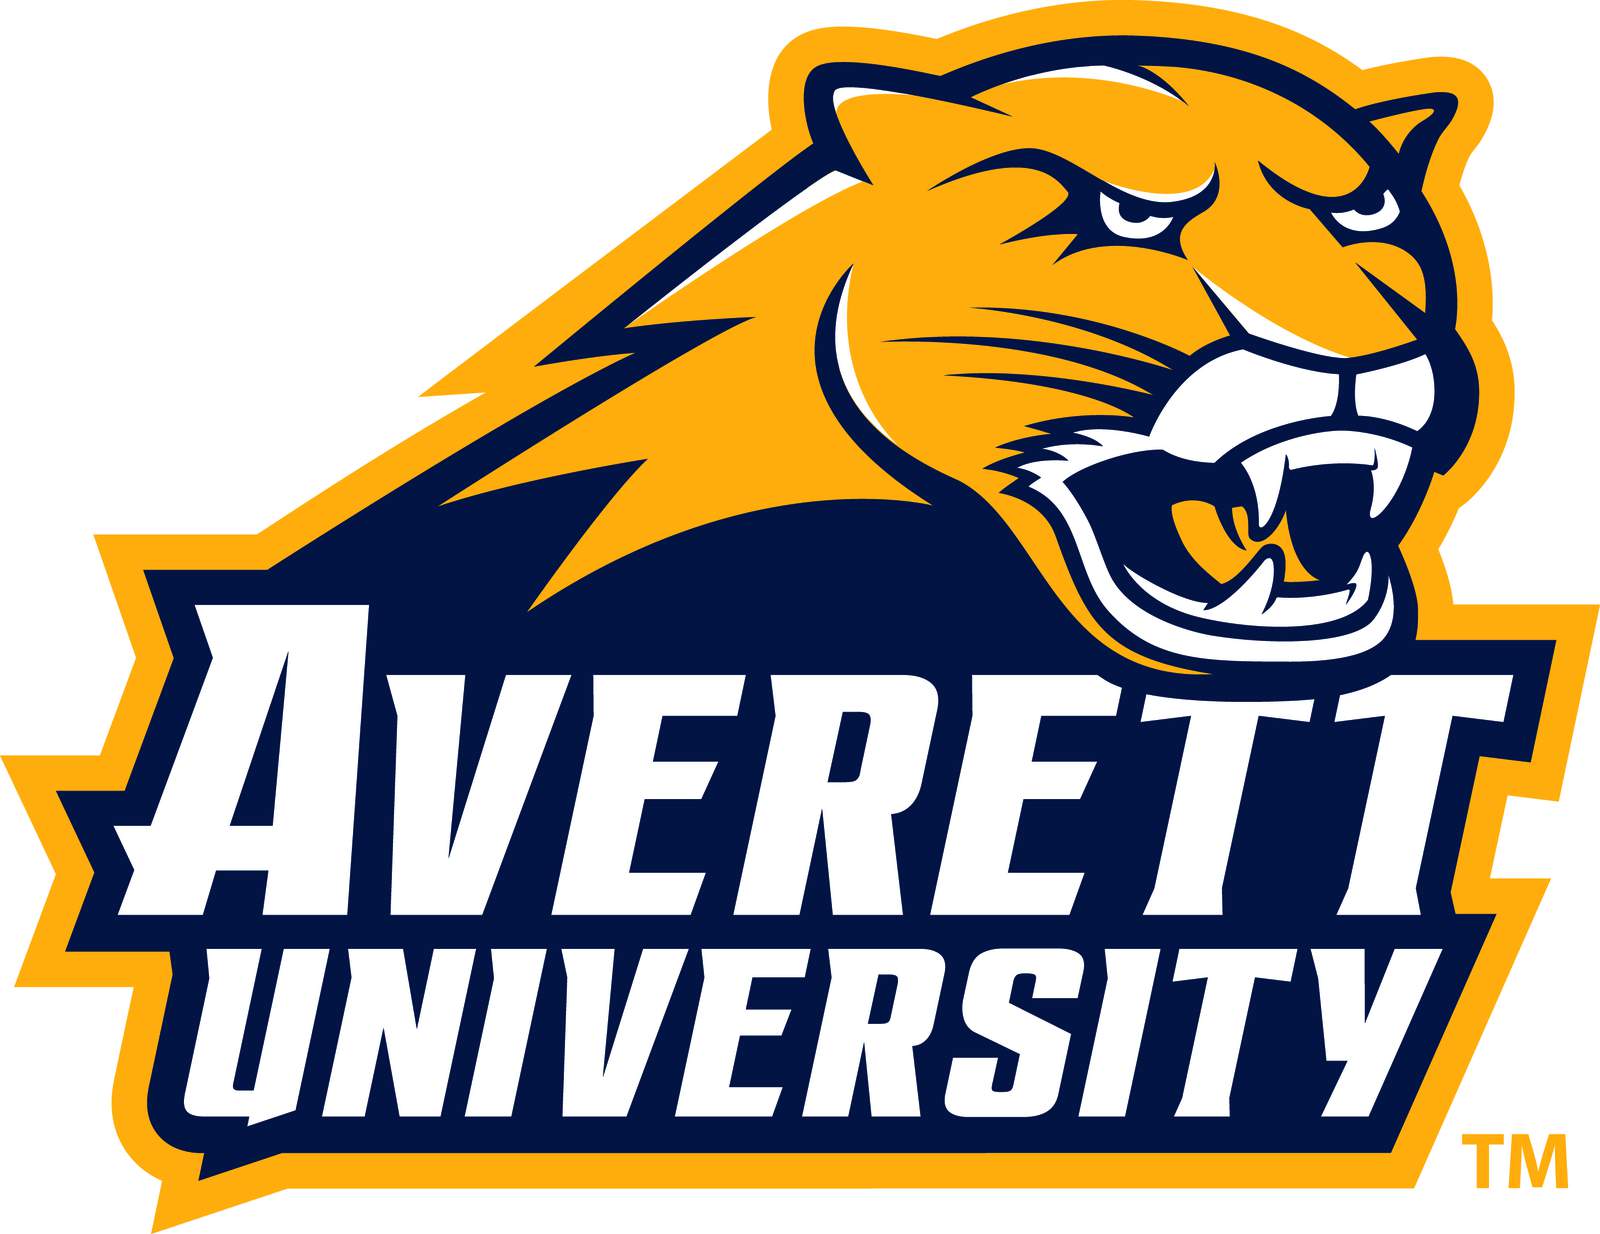 Averrett University to join ODAC in 2022-2023